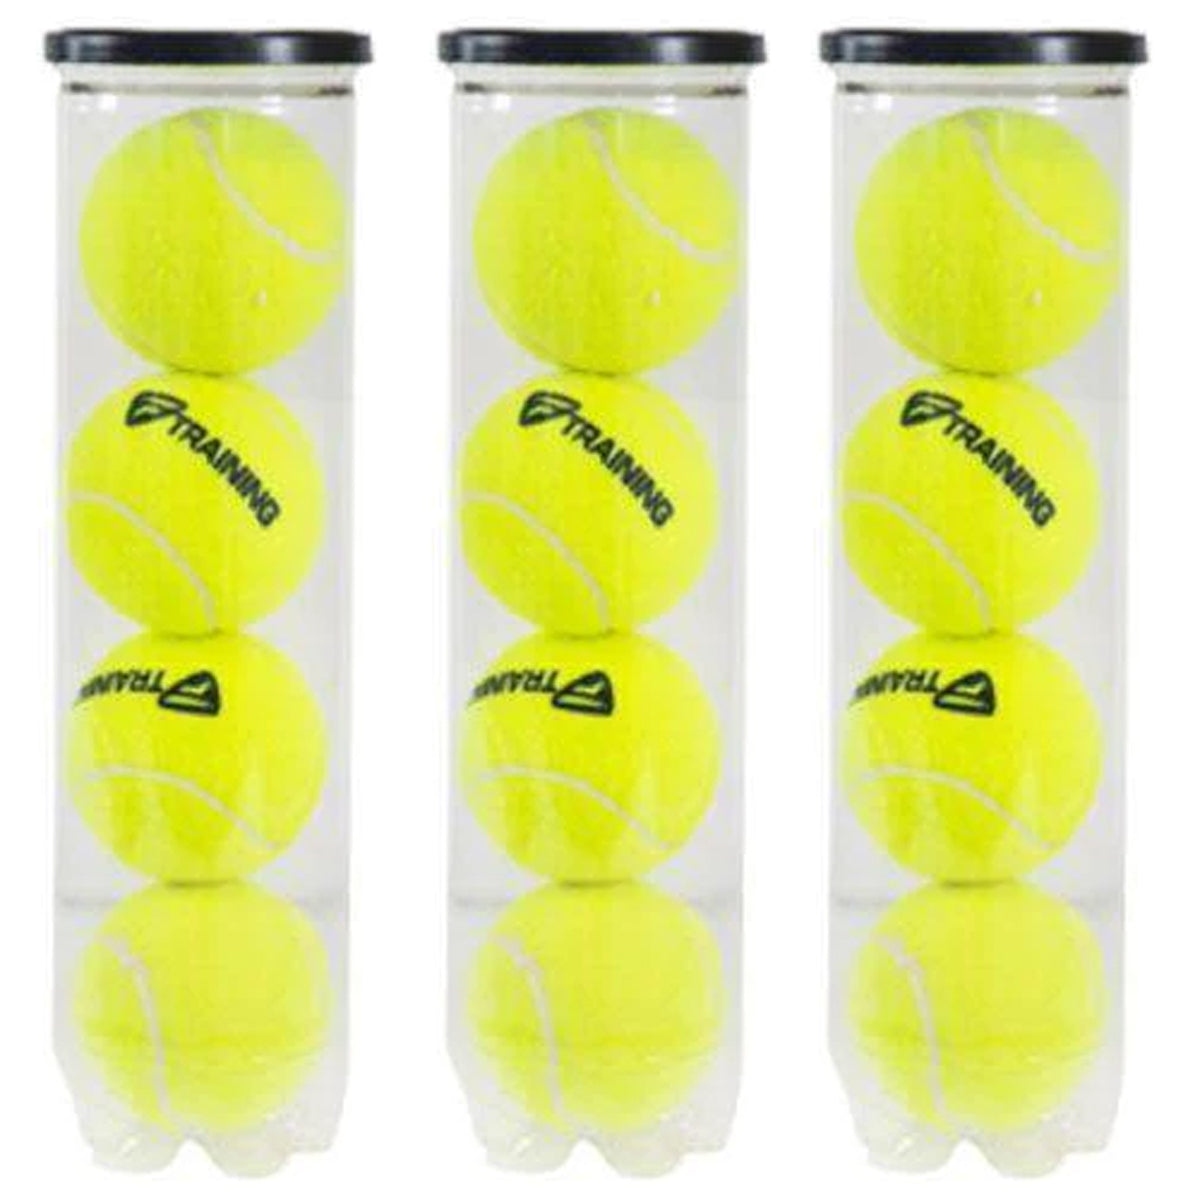 Tecnifibre Training Tennis Balls Dozen (3 Cans)